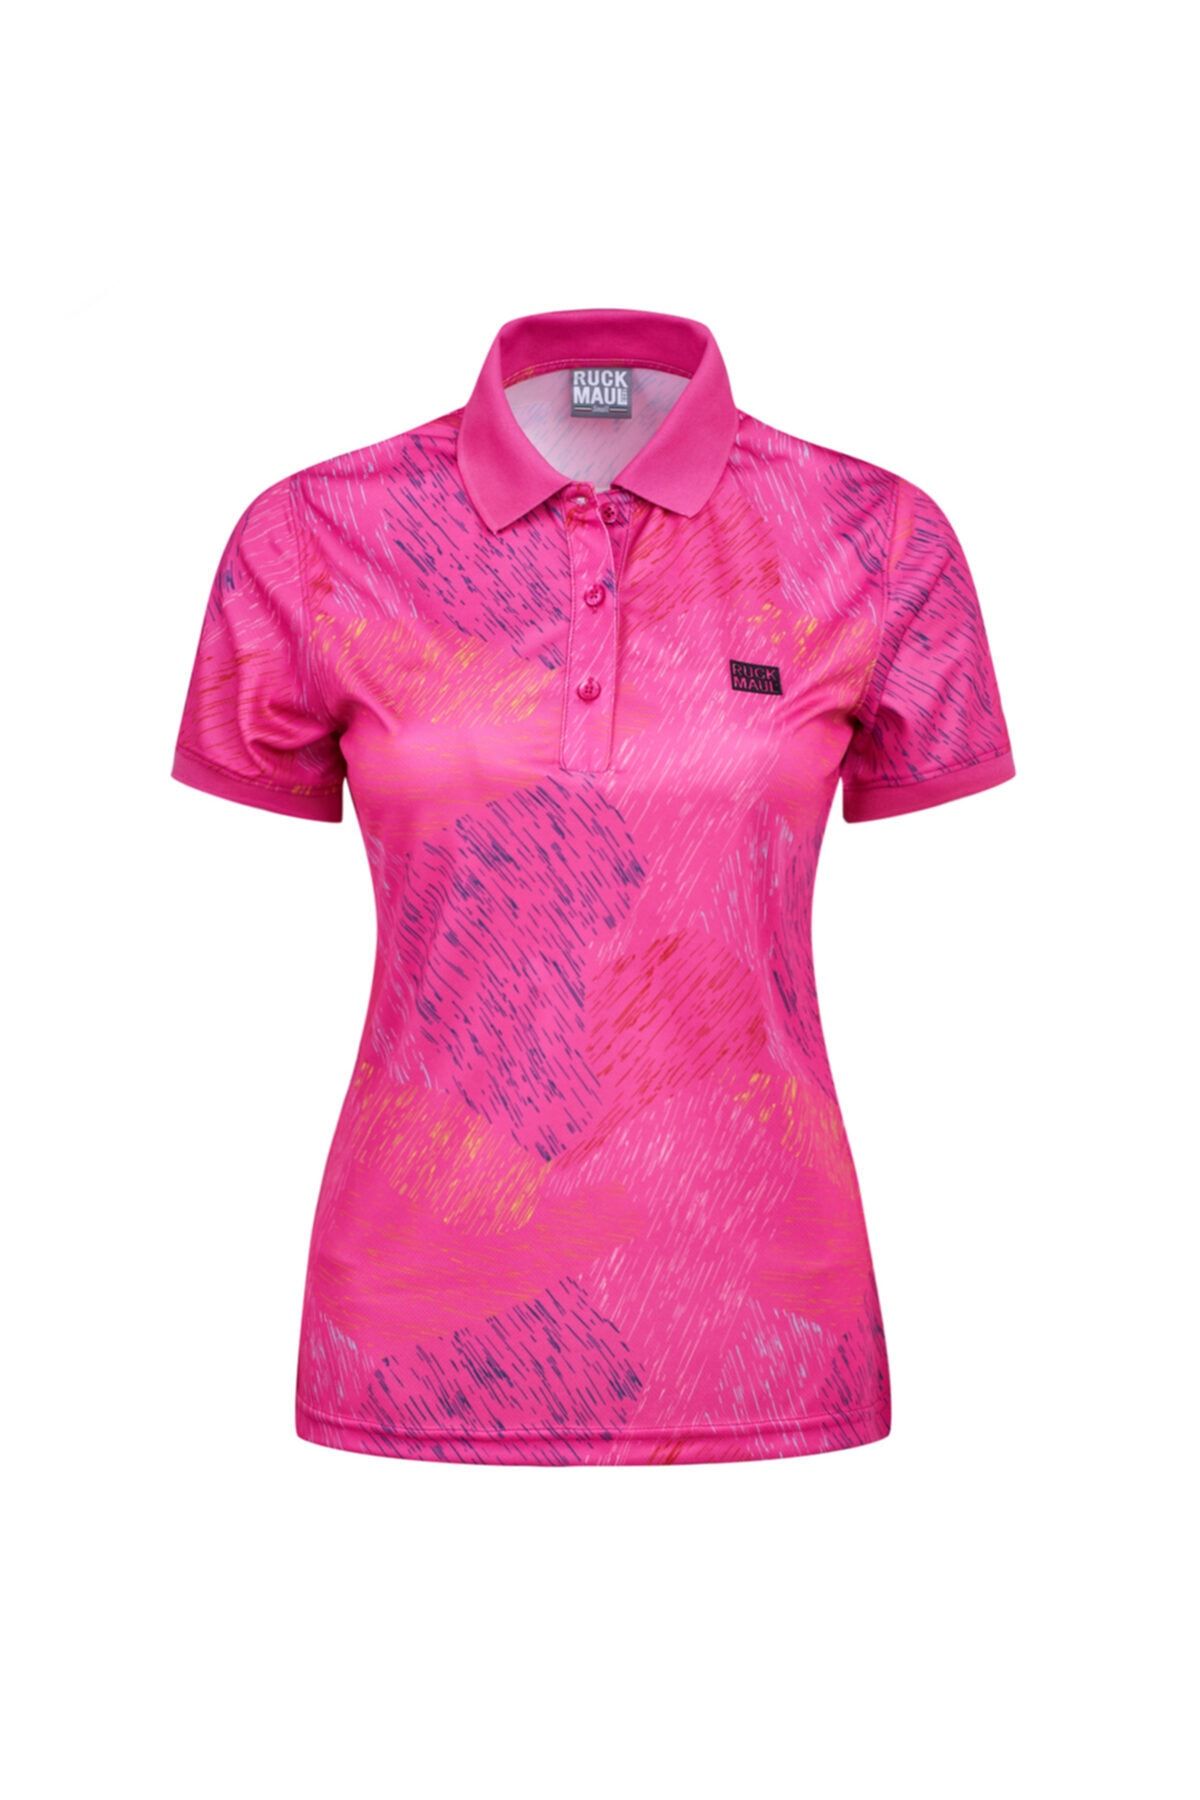 Ruck & Maul Kadın Fuşya Özel Golf Koleksiyonu Polo Yaka Tshirt